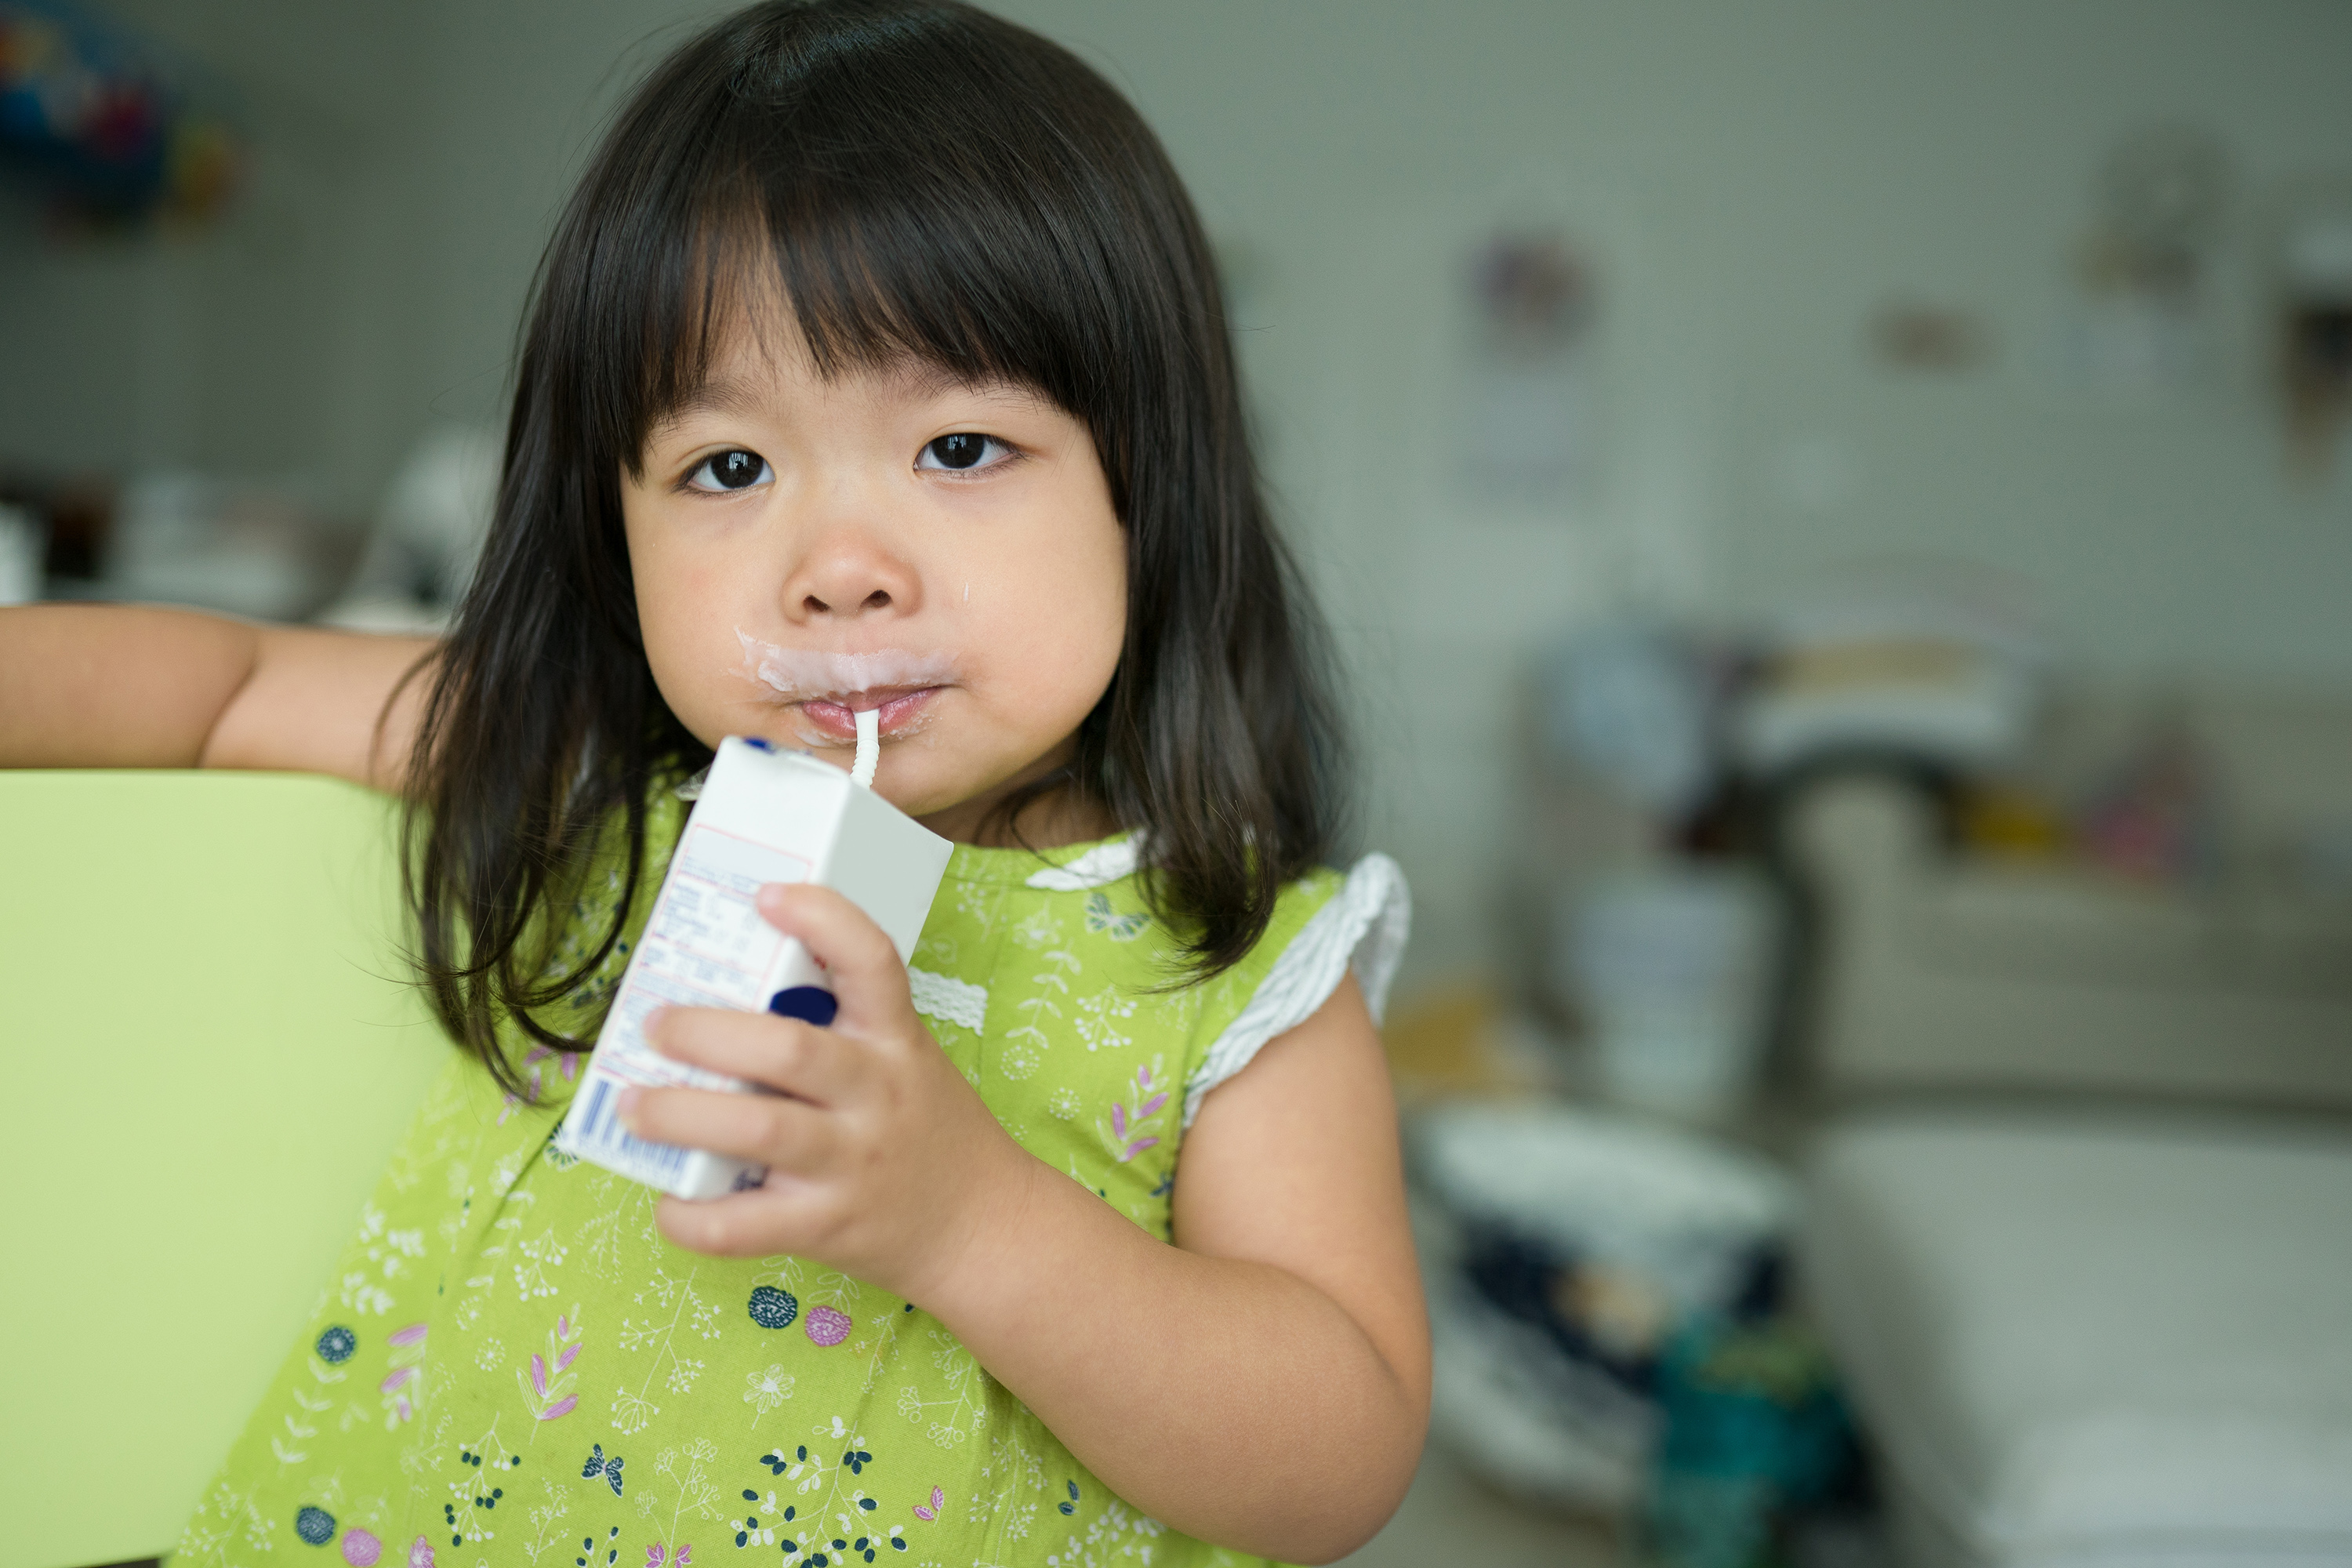 No Chocolate Milk? No Problem, Kids Get Used to Plain Milk - UConn